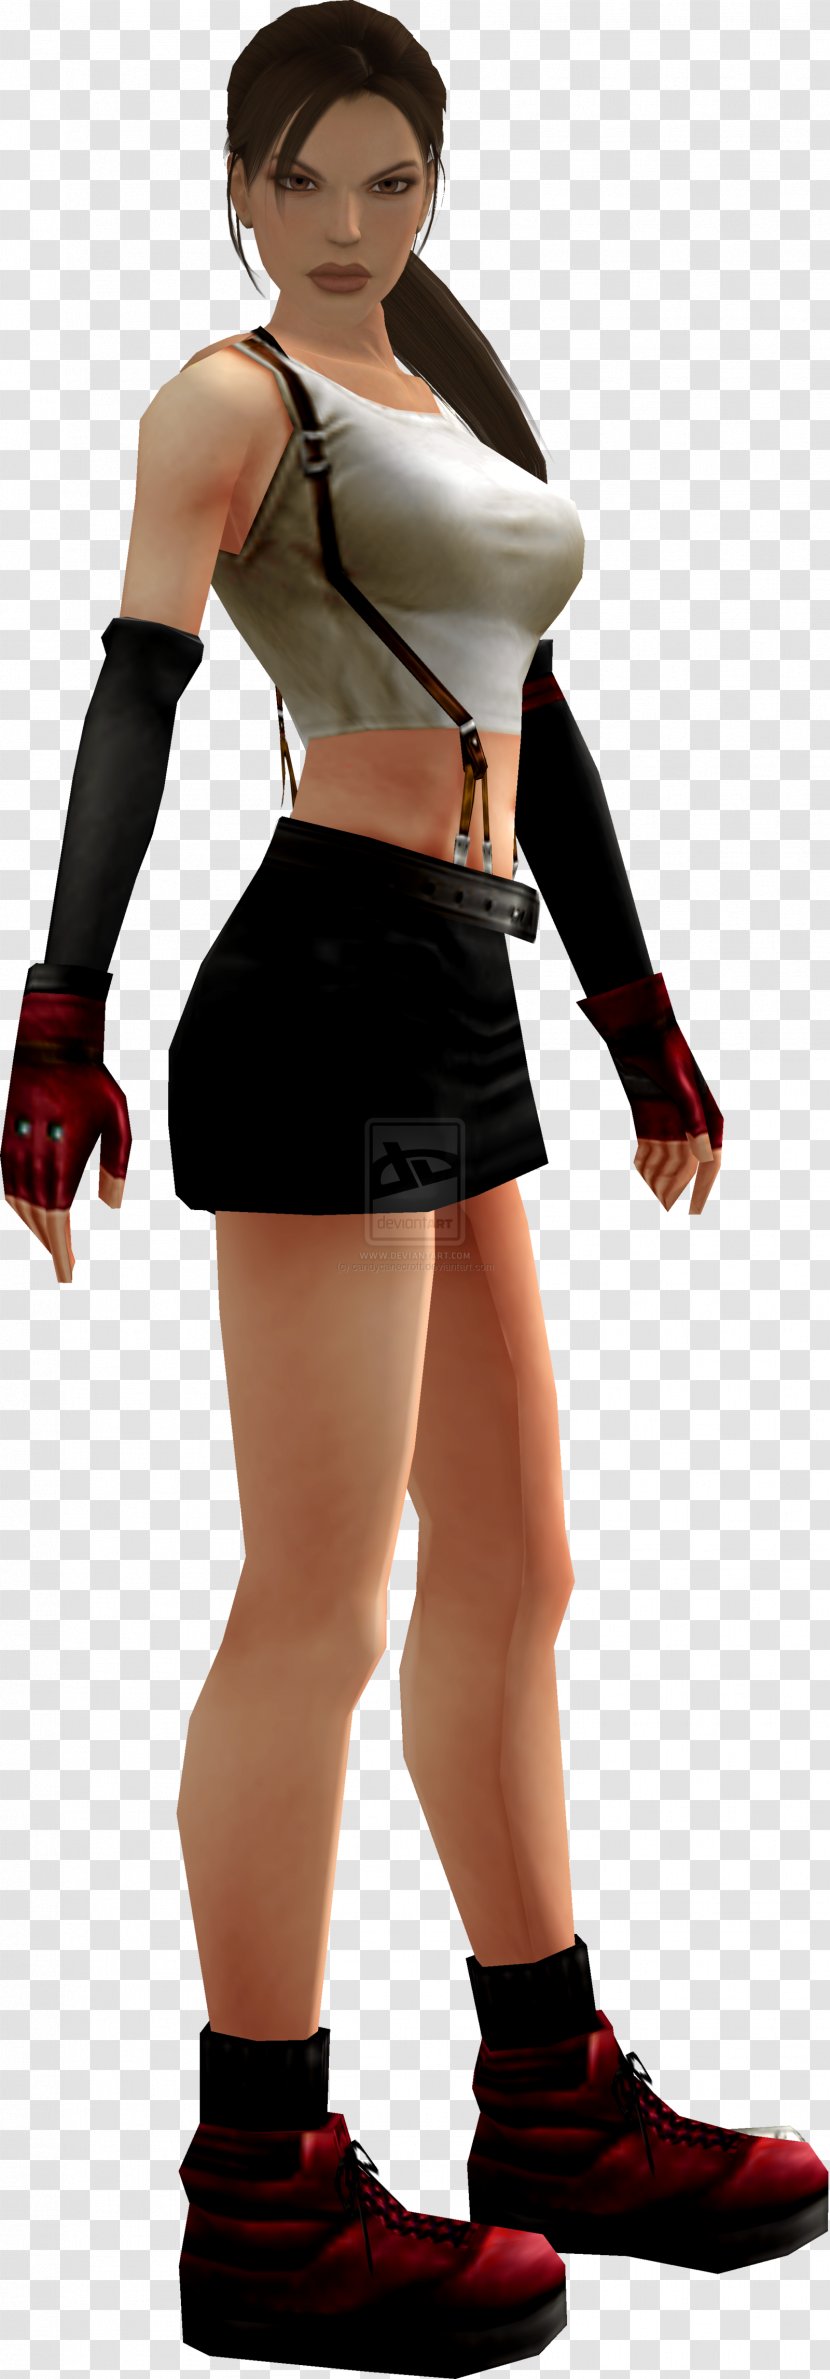 Shoulder Shoe Character Fiction - Lara Croft Transparent PNG